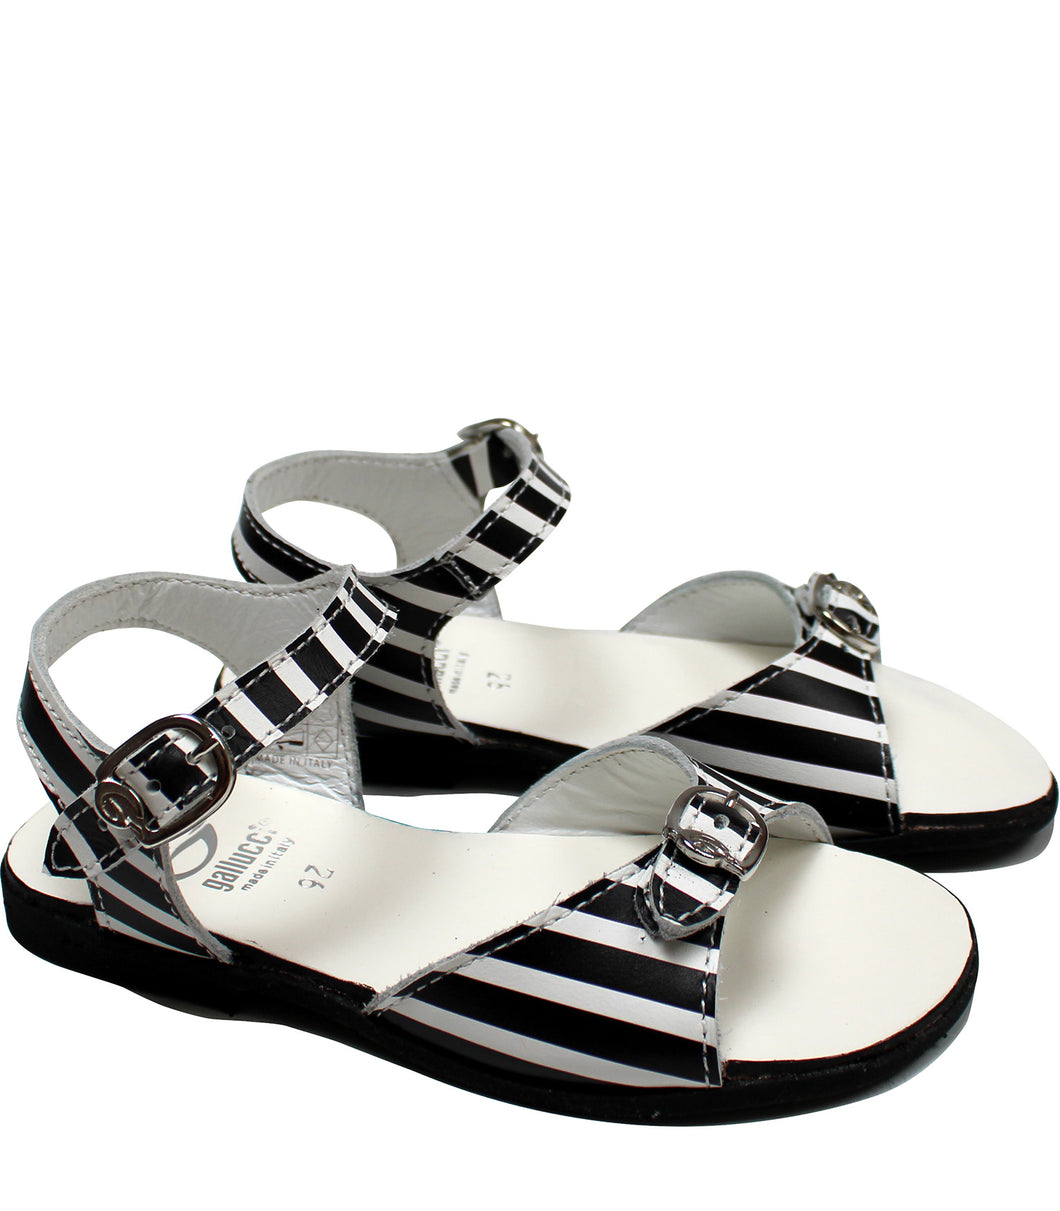 Zebra sandals